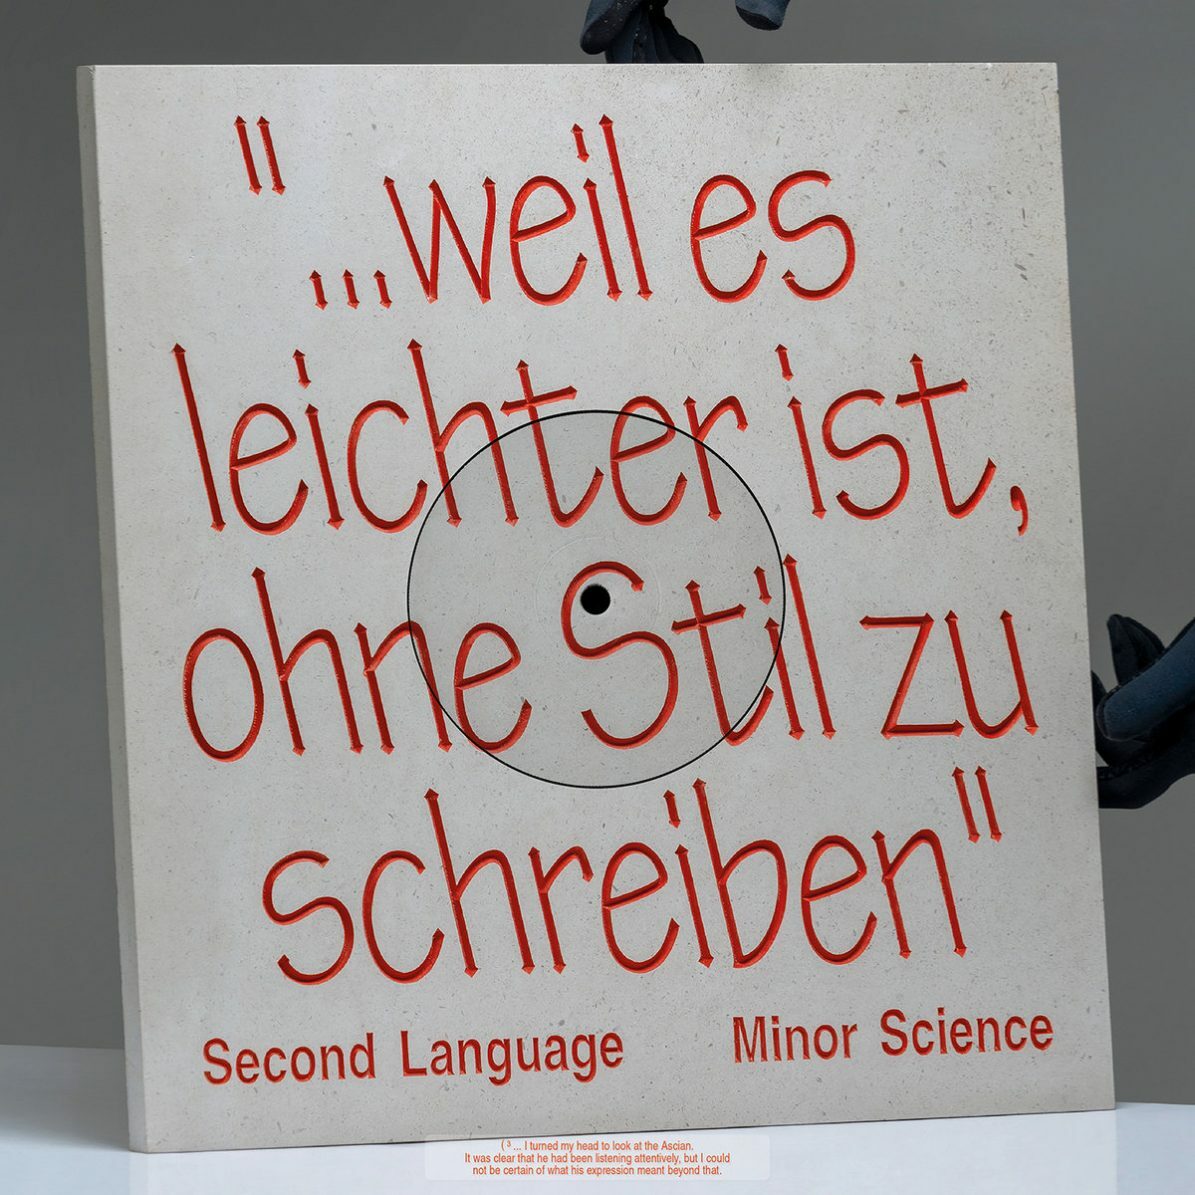 Minor Science – Second Language (Whities, 2020)